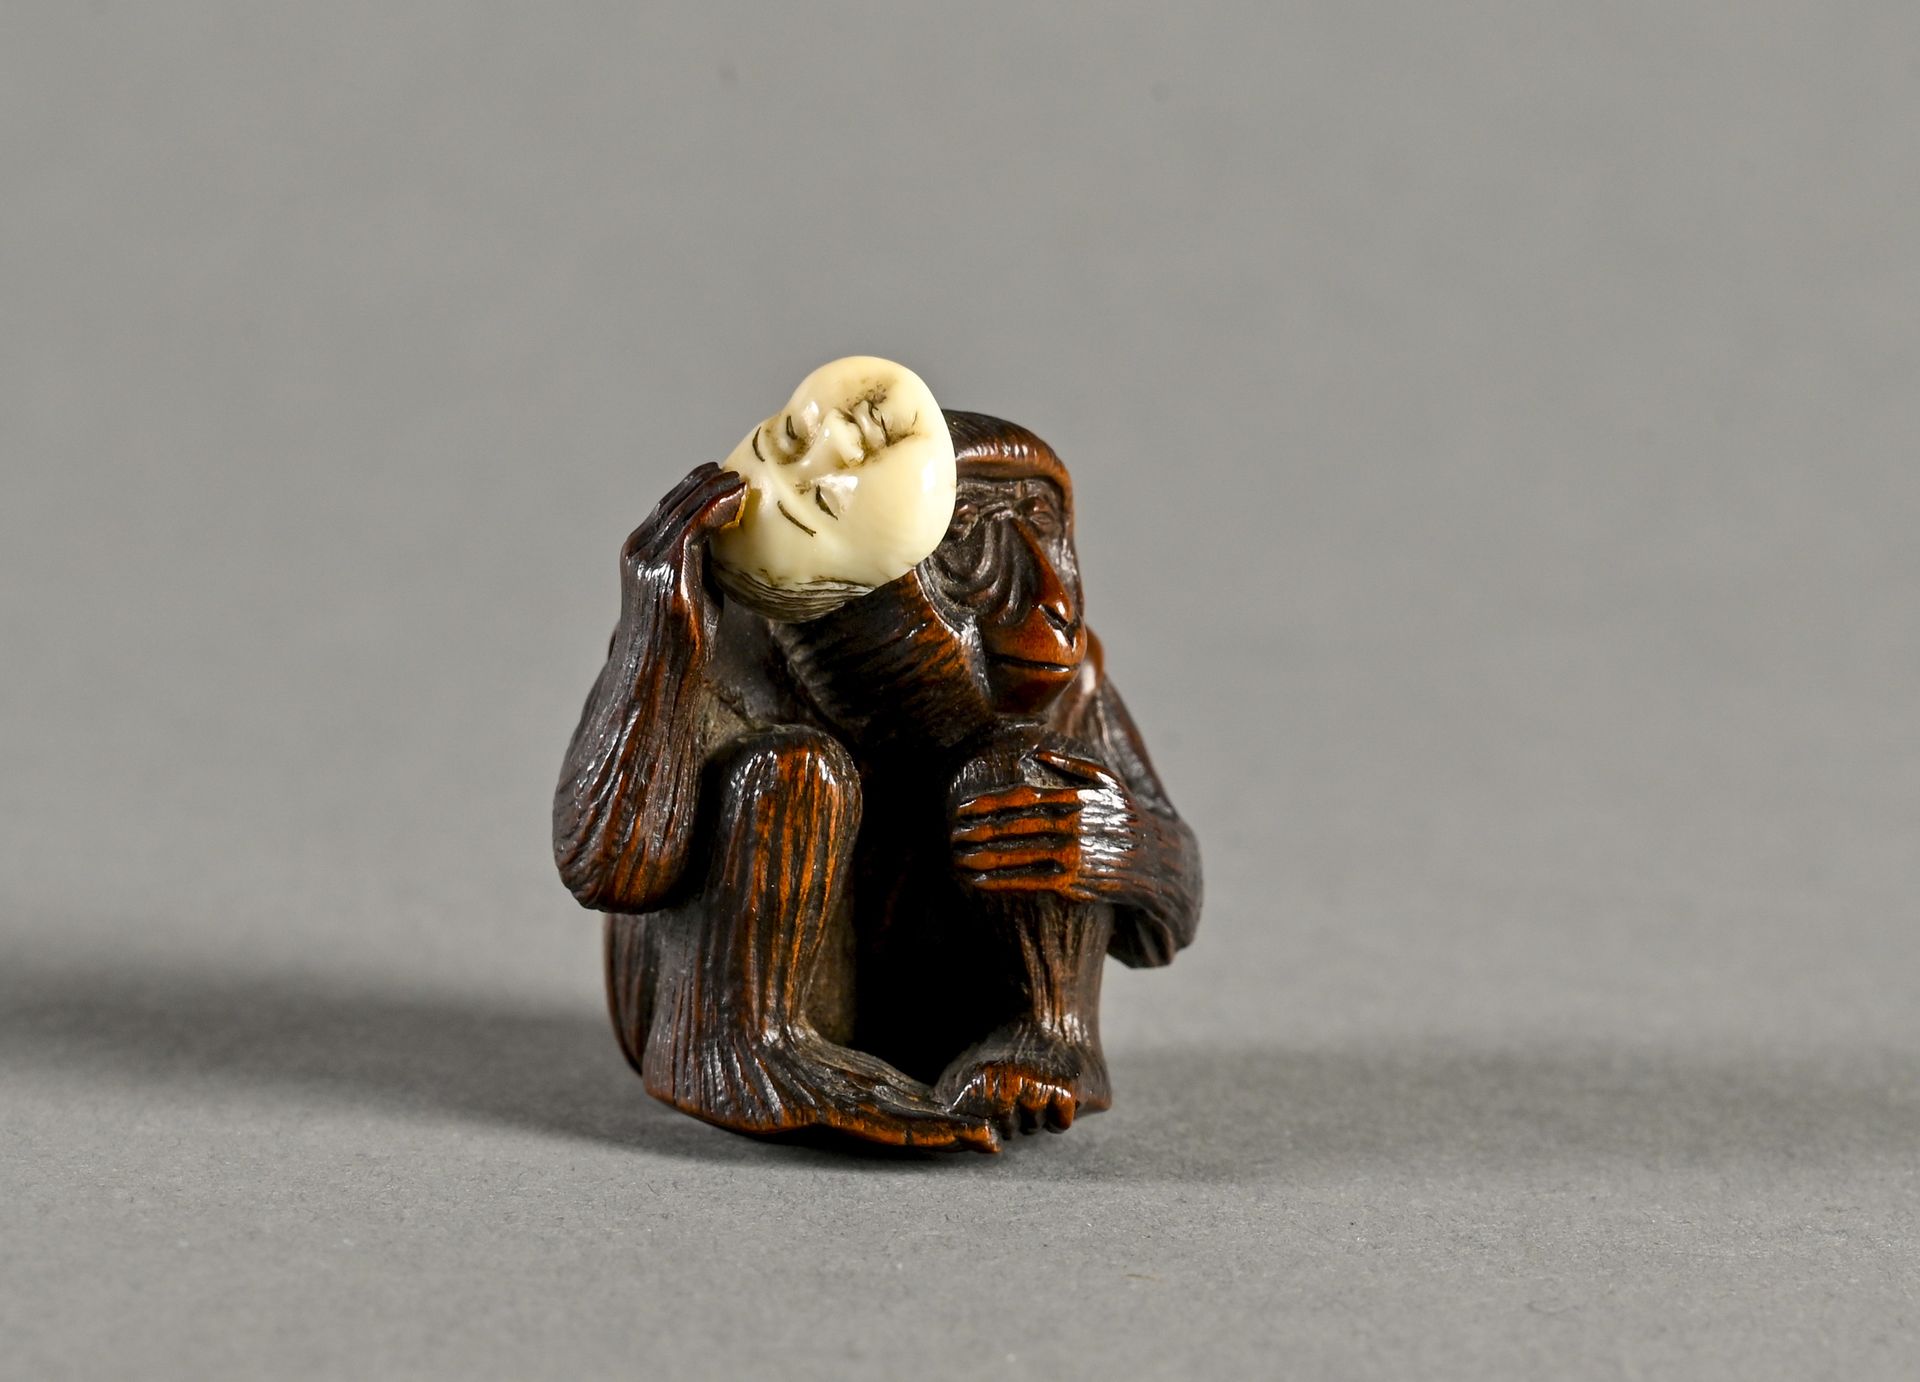 JAPON, Epoque Meiji, 1880 代表猴子的黄杨木网饰，拿着okame的面具

背面有两个himotoshi孔

签名为 "Tai tei"？&hellip;